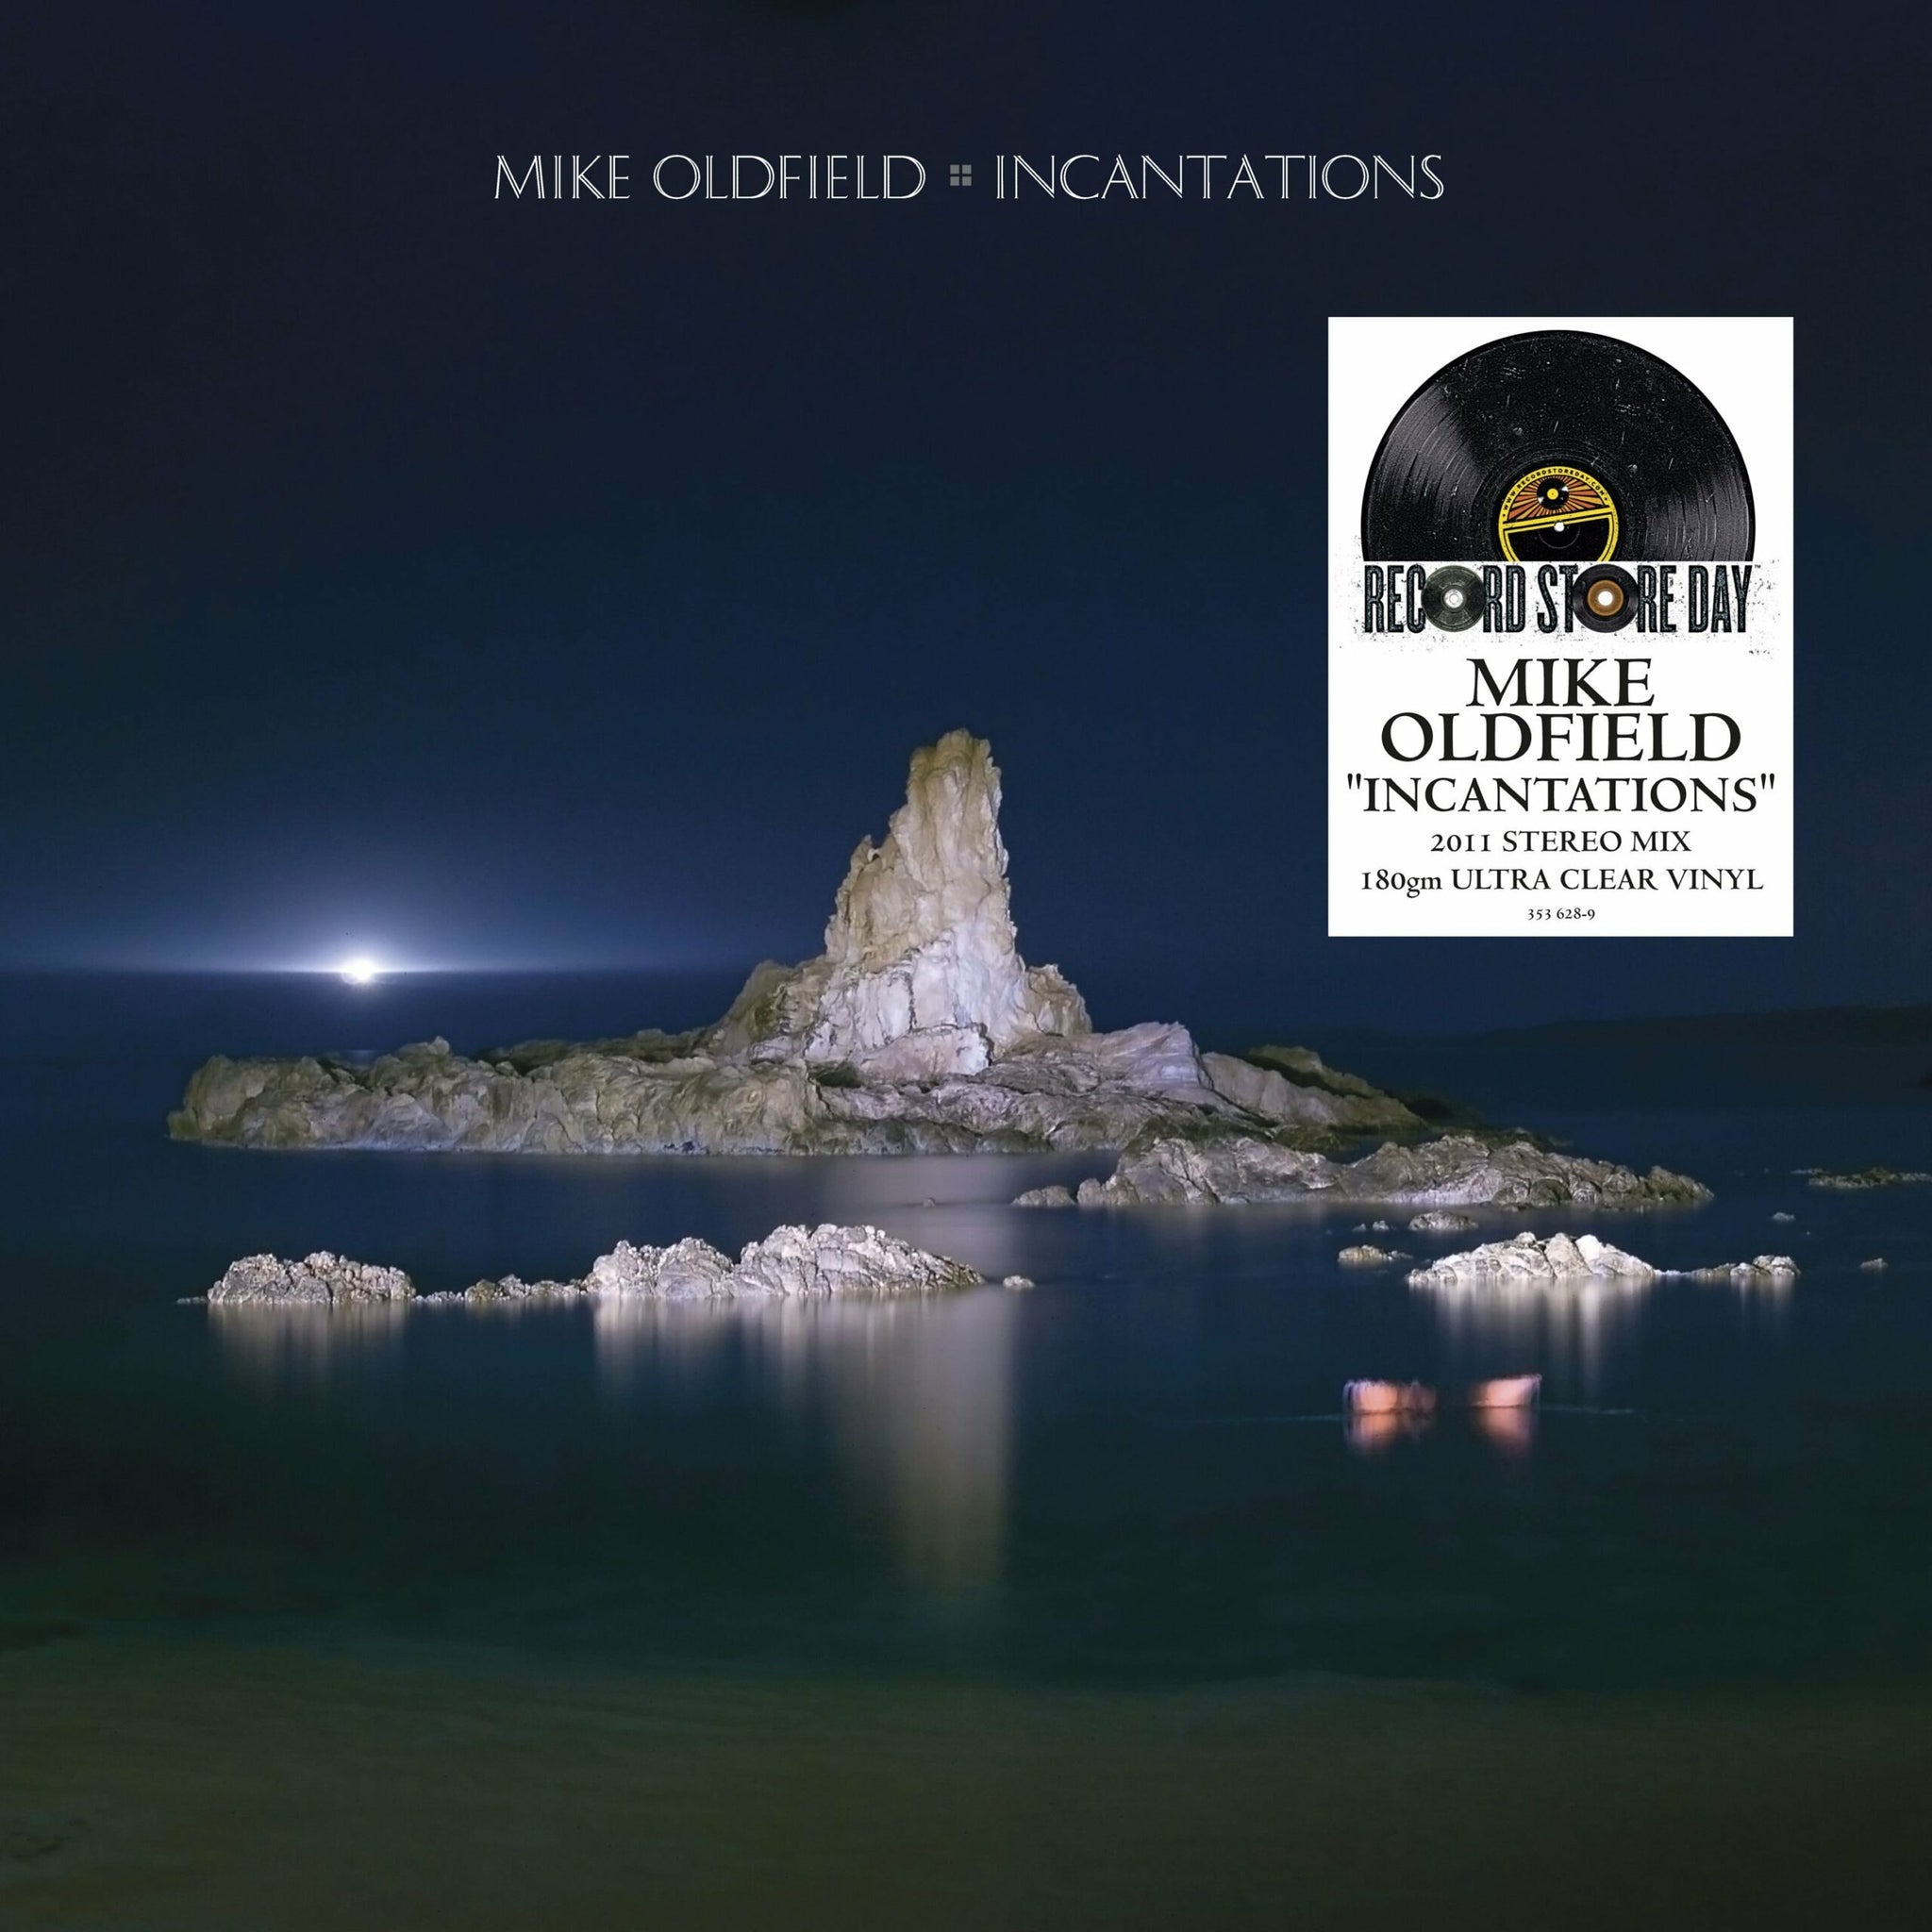 Oldfield, Mike: Incantations (Coloured Vinyl 2xLP)